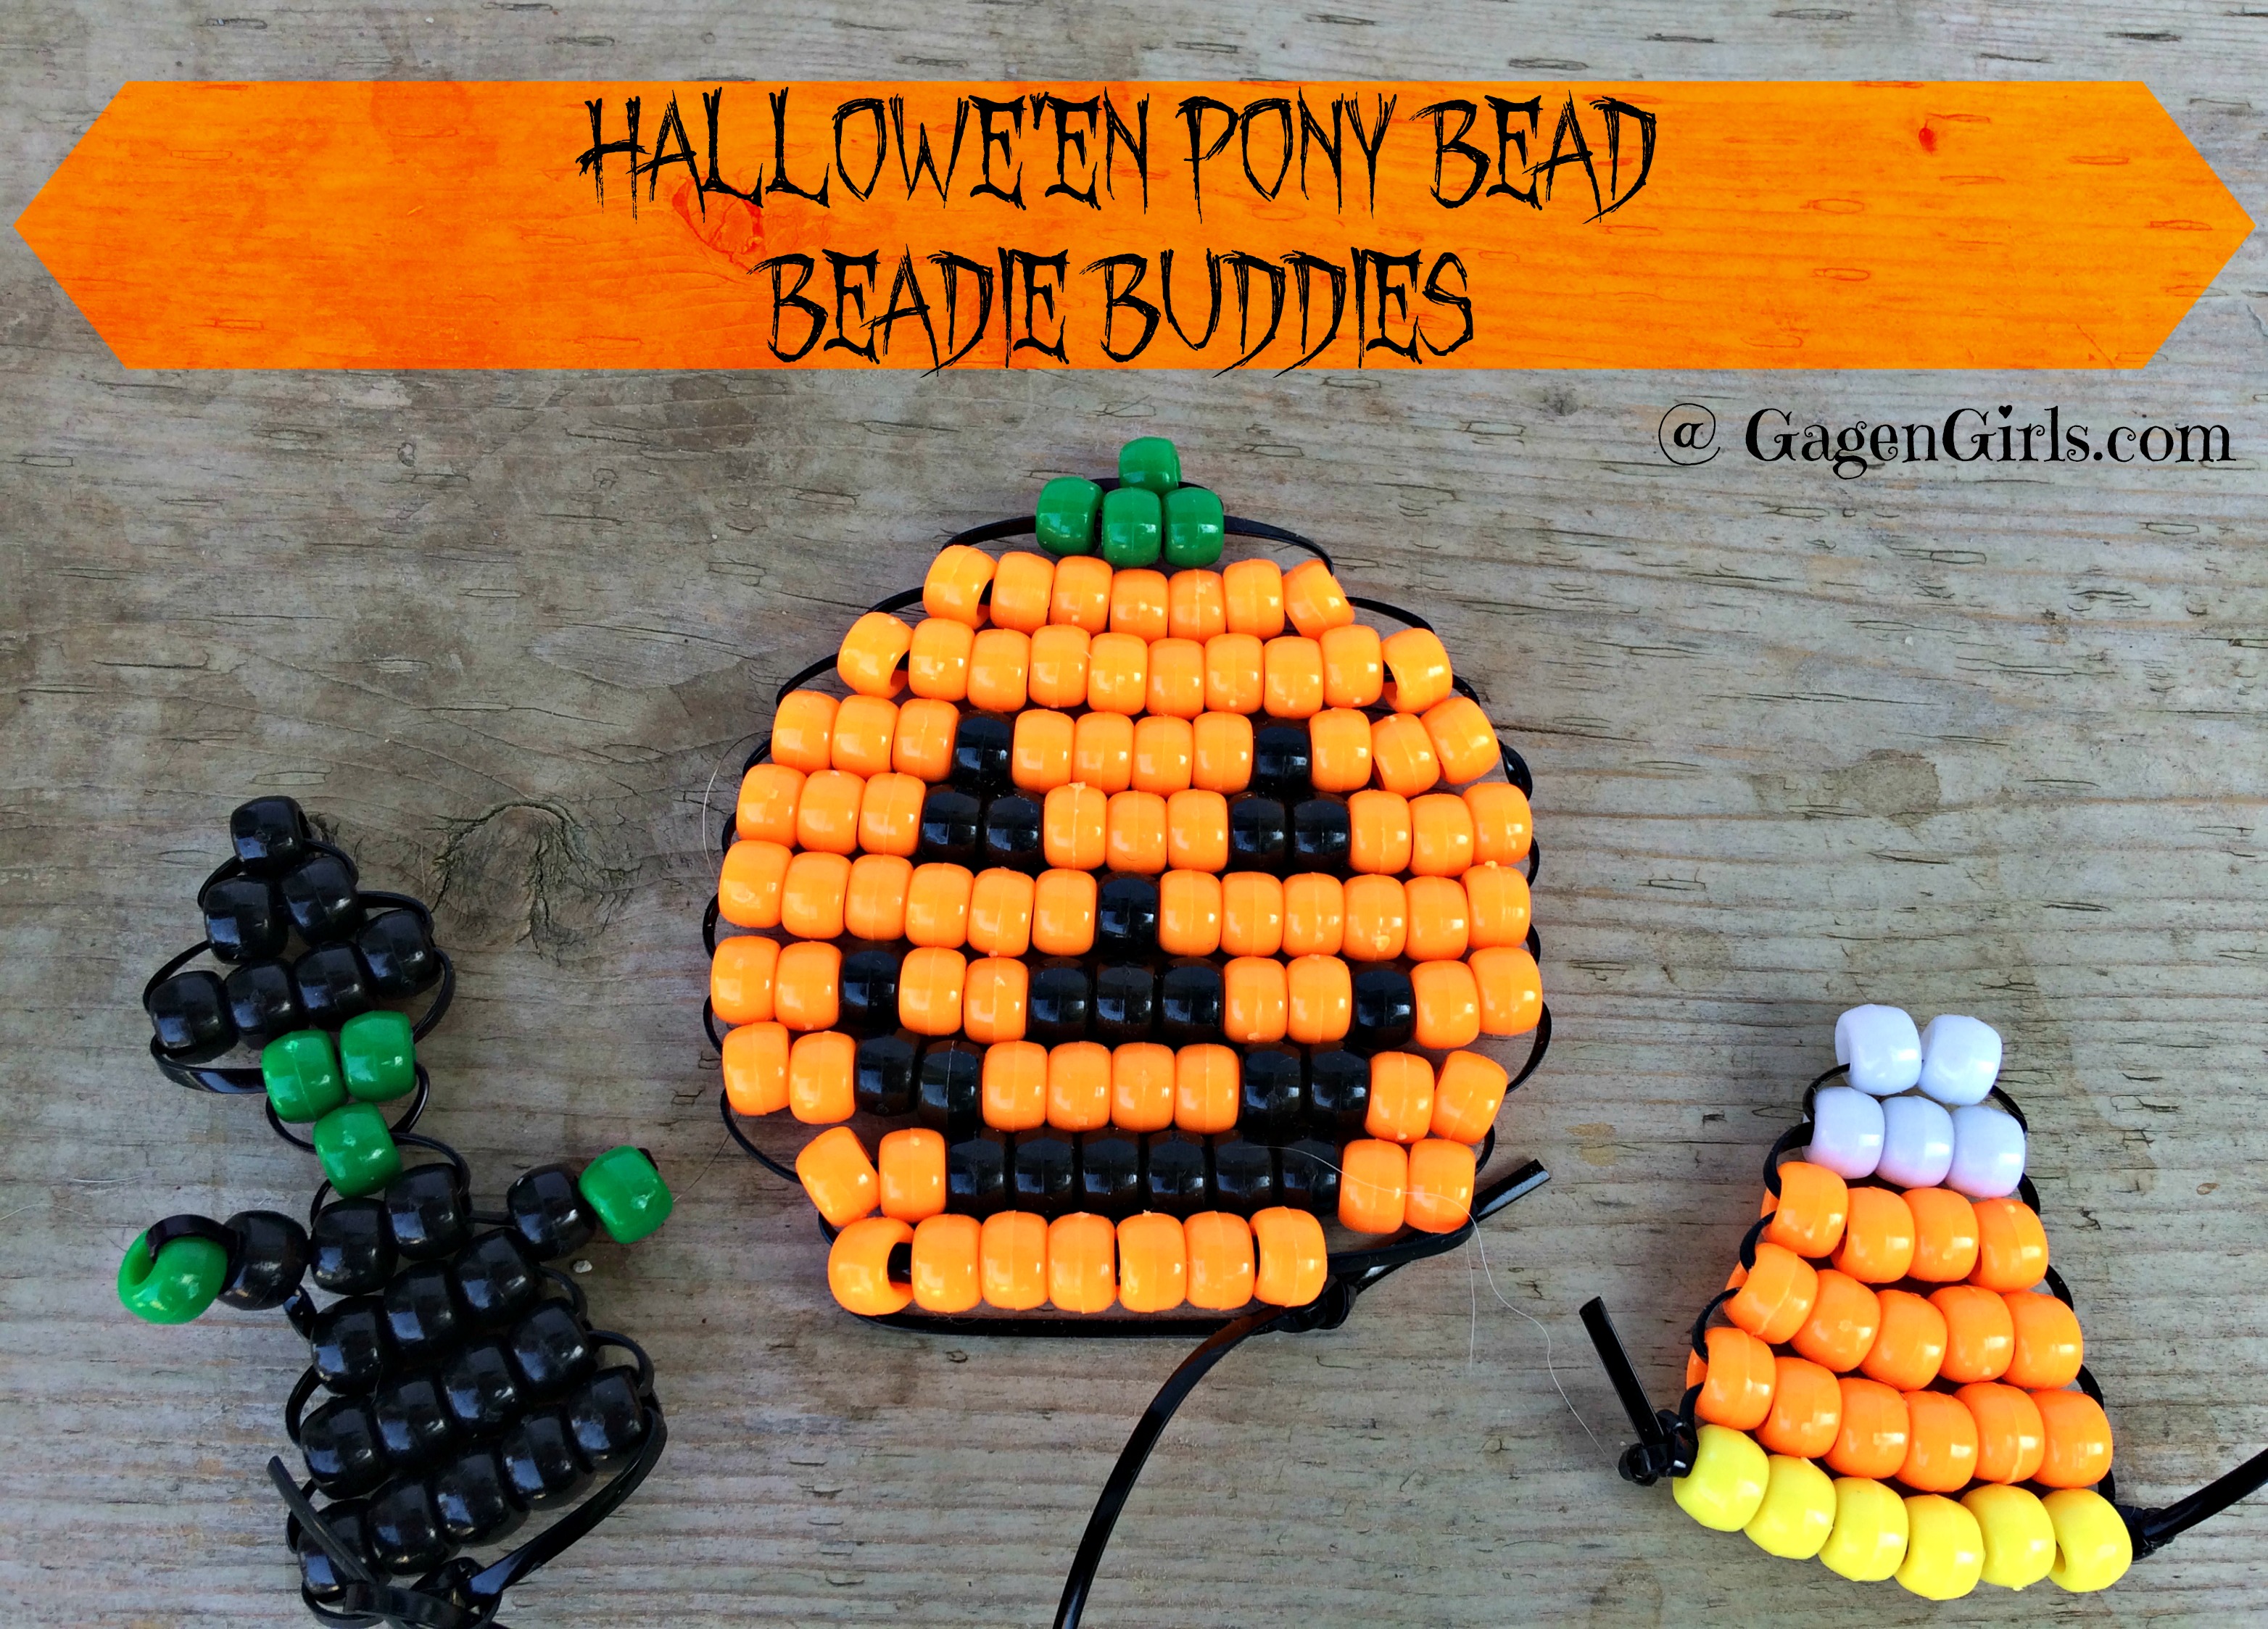 Halloween pony bead beadie buddies - a jack-o'-lantern, a candy corn, and a witch.